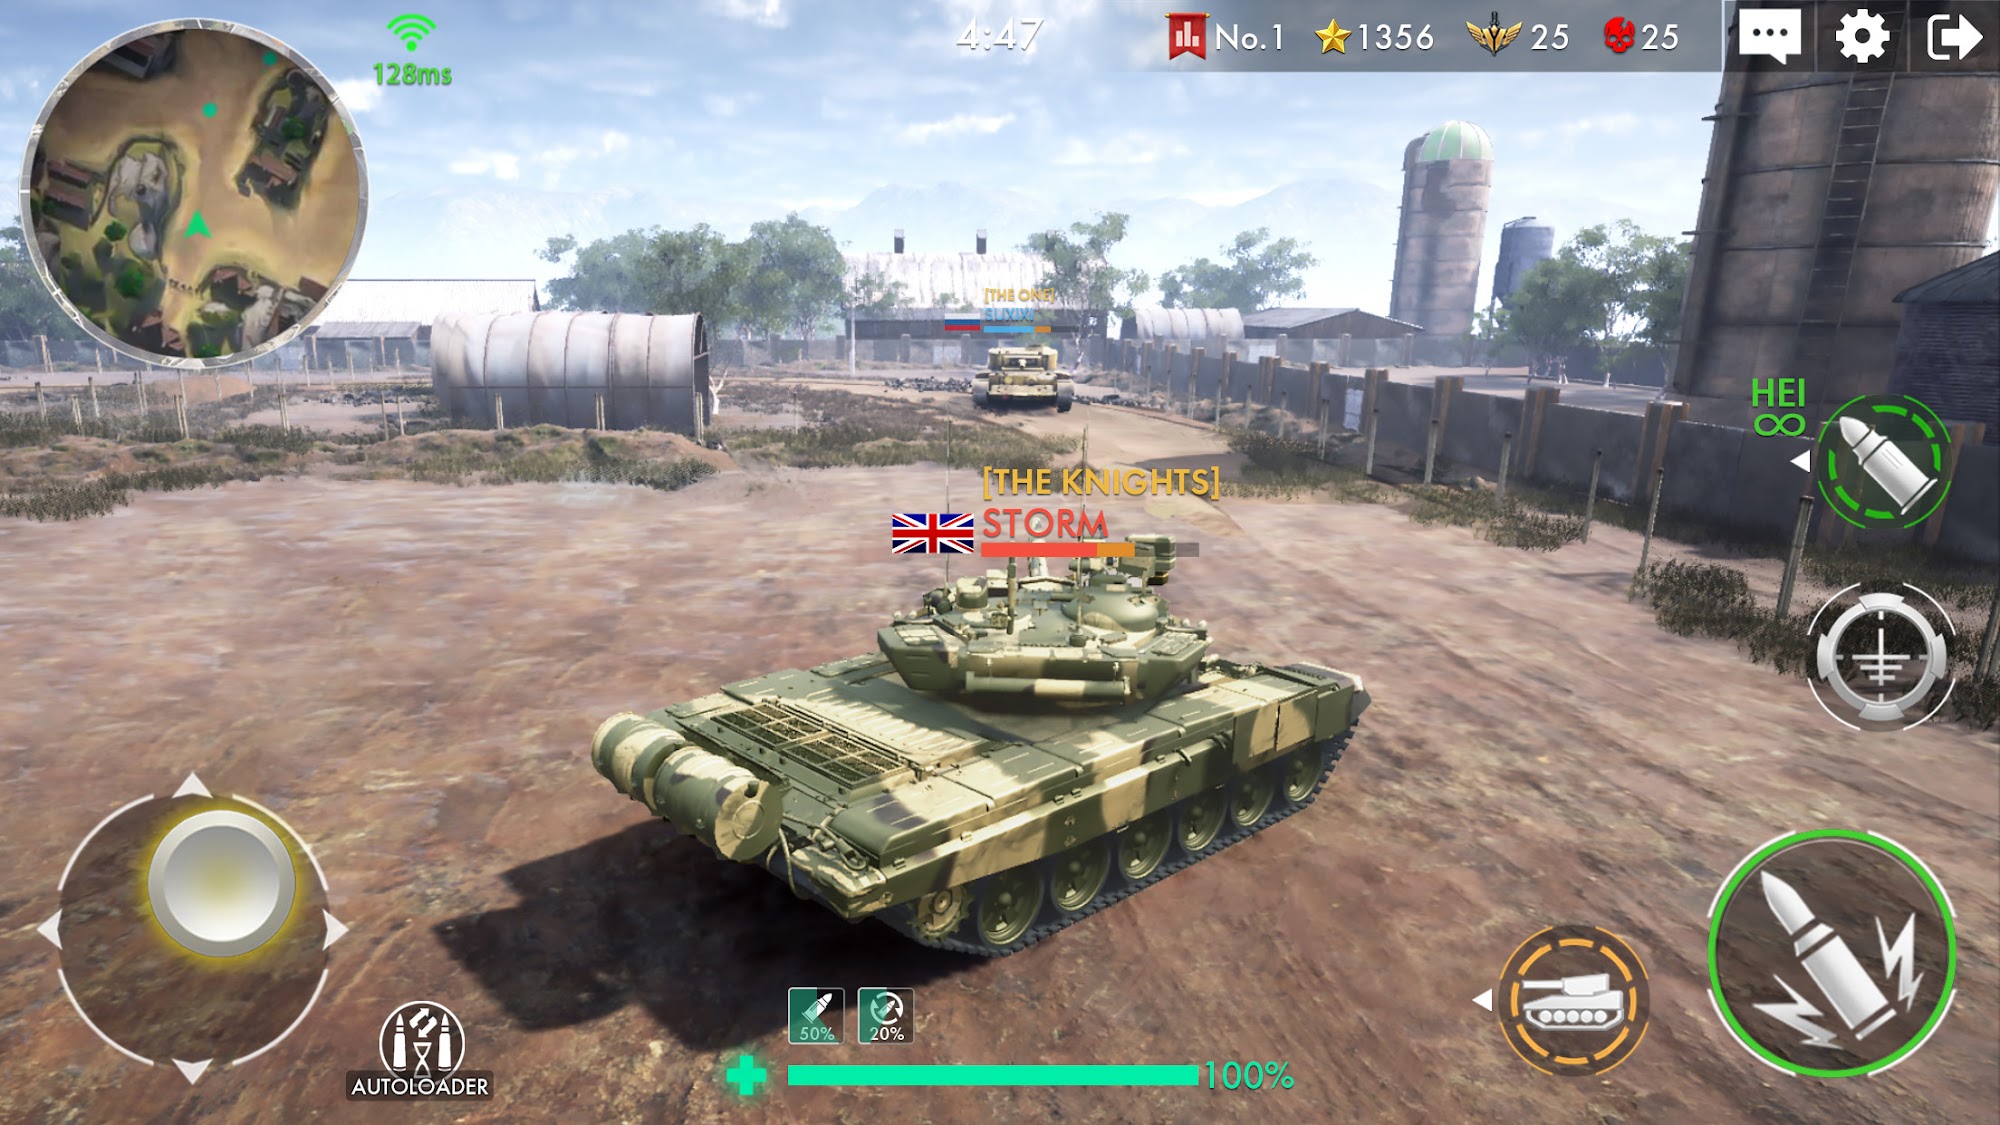 Tank Warfare: PvP Battle Game - Android game screenshots.